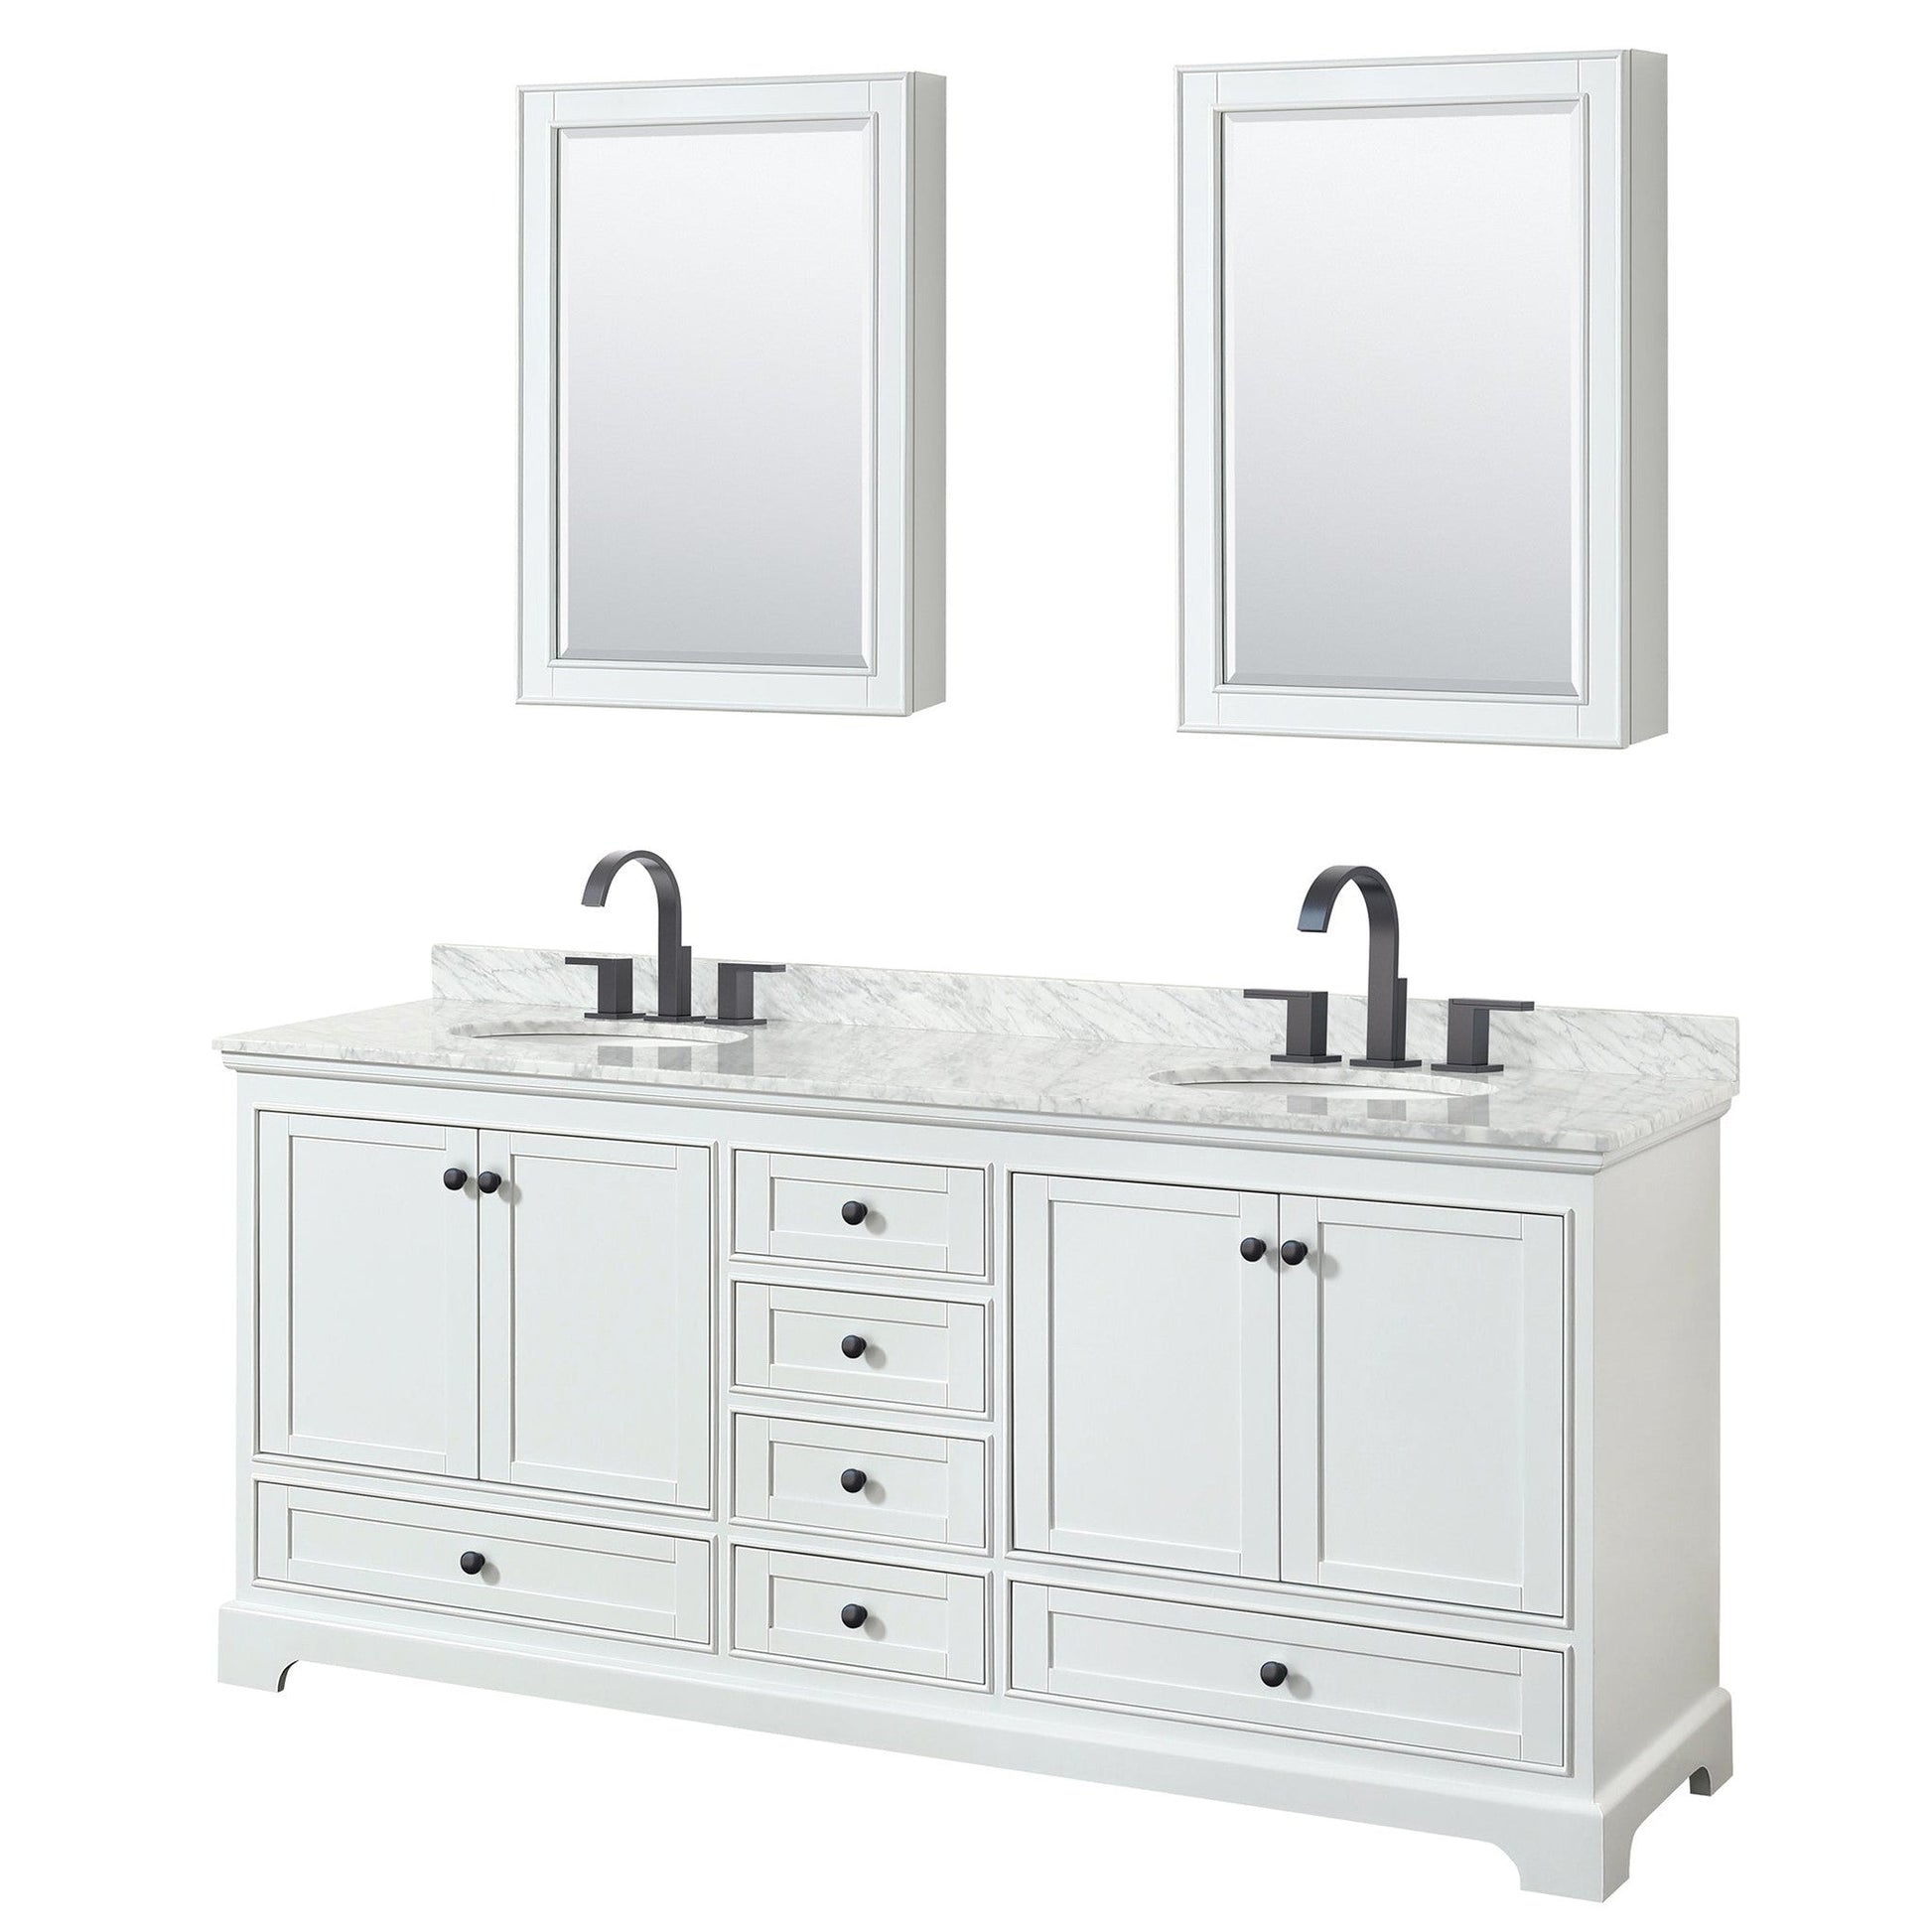 Deborah 80" Double Bathroom Vanity in White, White Carrara Marble Countertop, Undermount Oval Sinks, Matte Black Trim, Medicine Cabinets